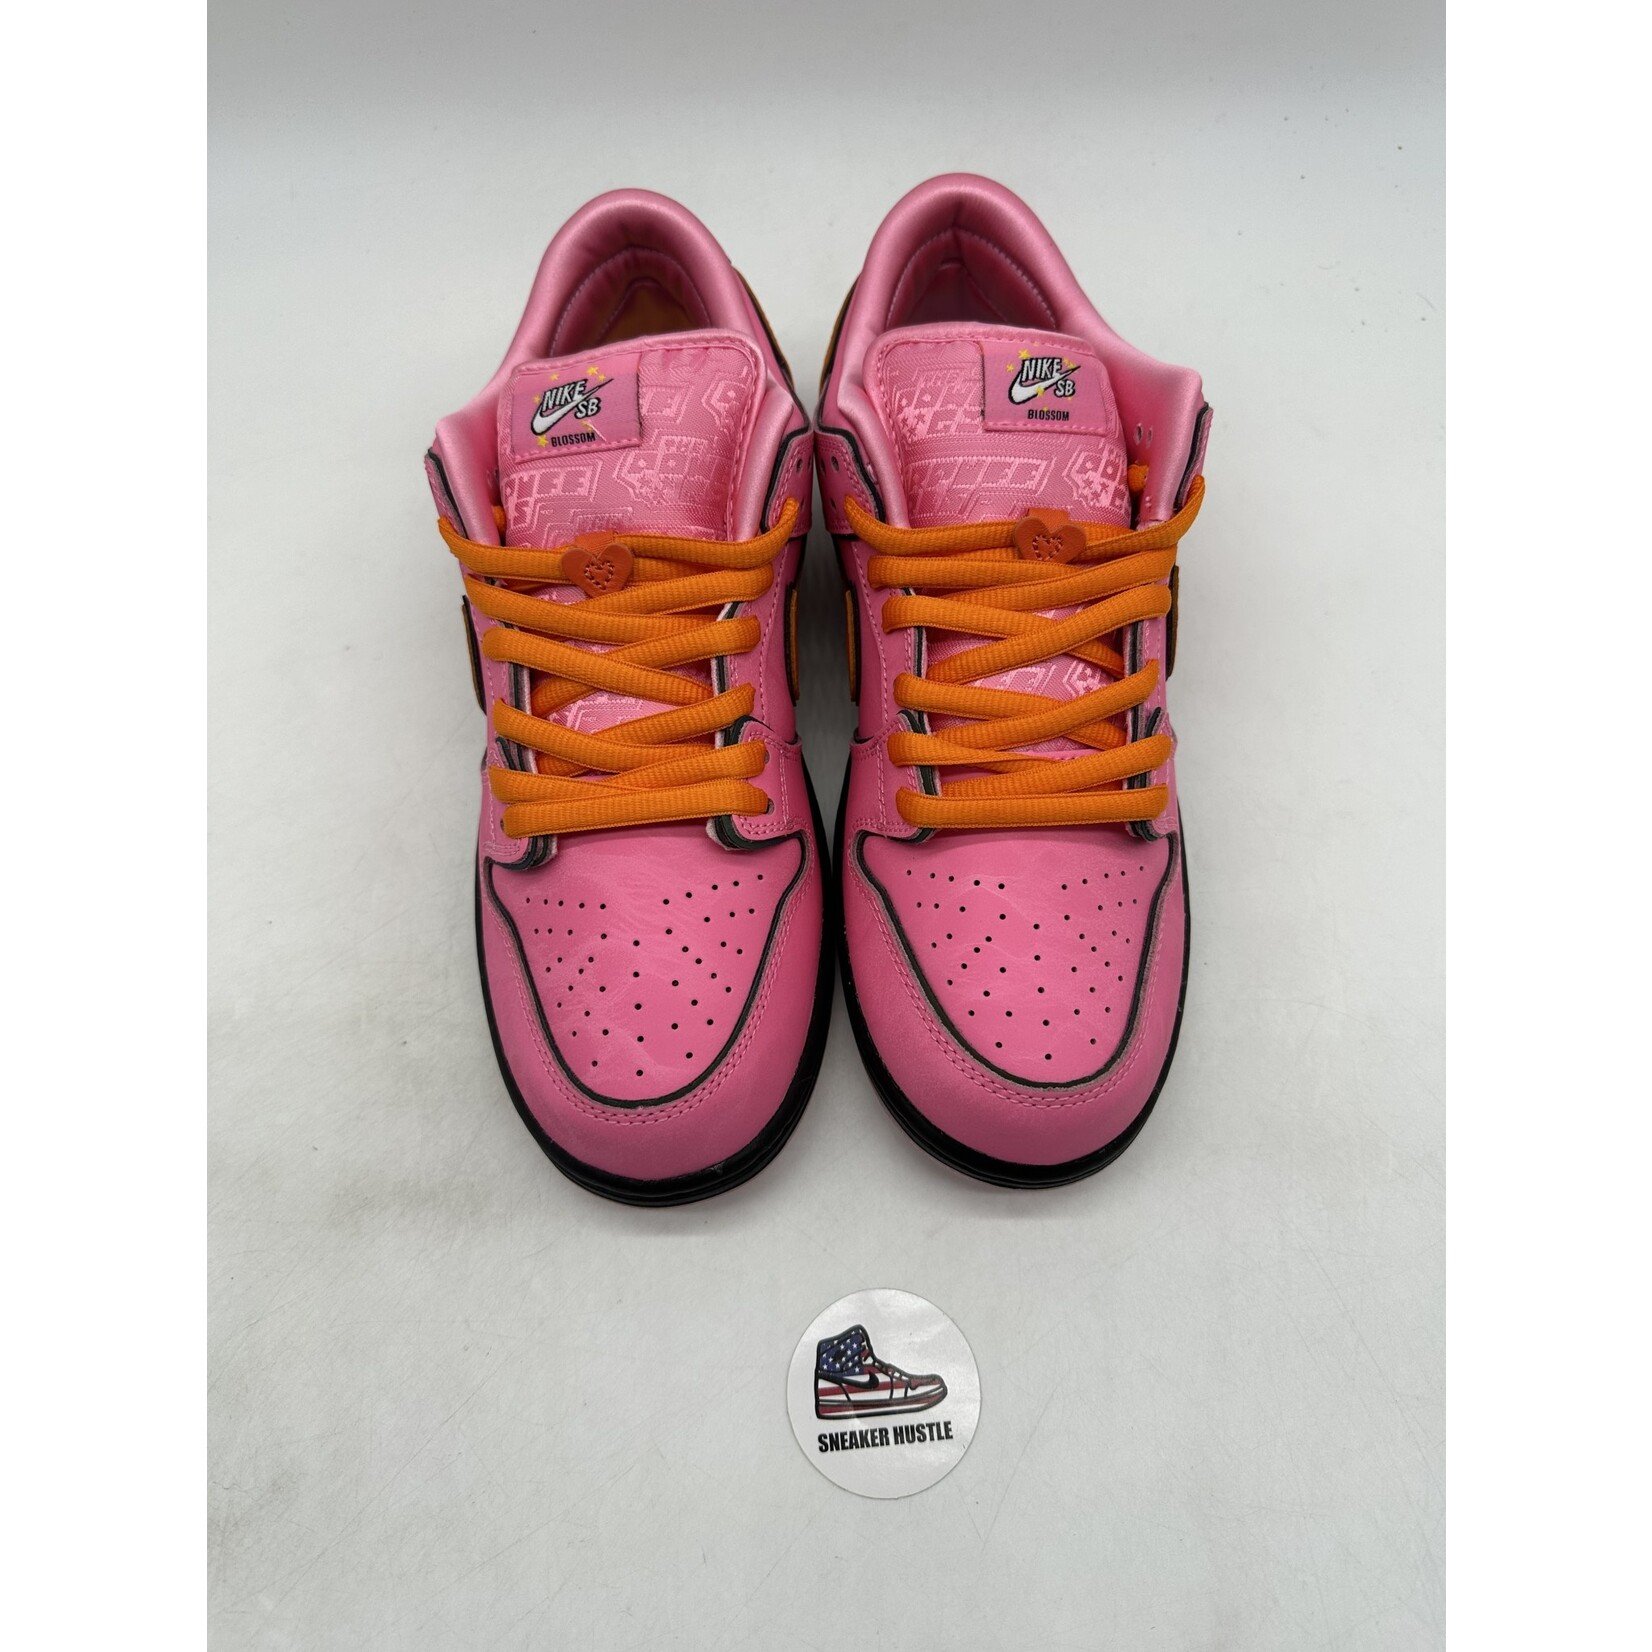 Nike SB Dunk Low The Powerpuff Girls Blossom - Sneaker Hustle